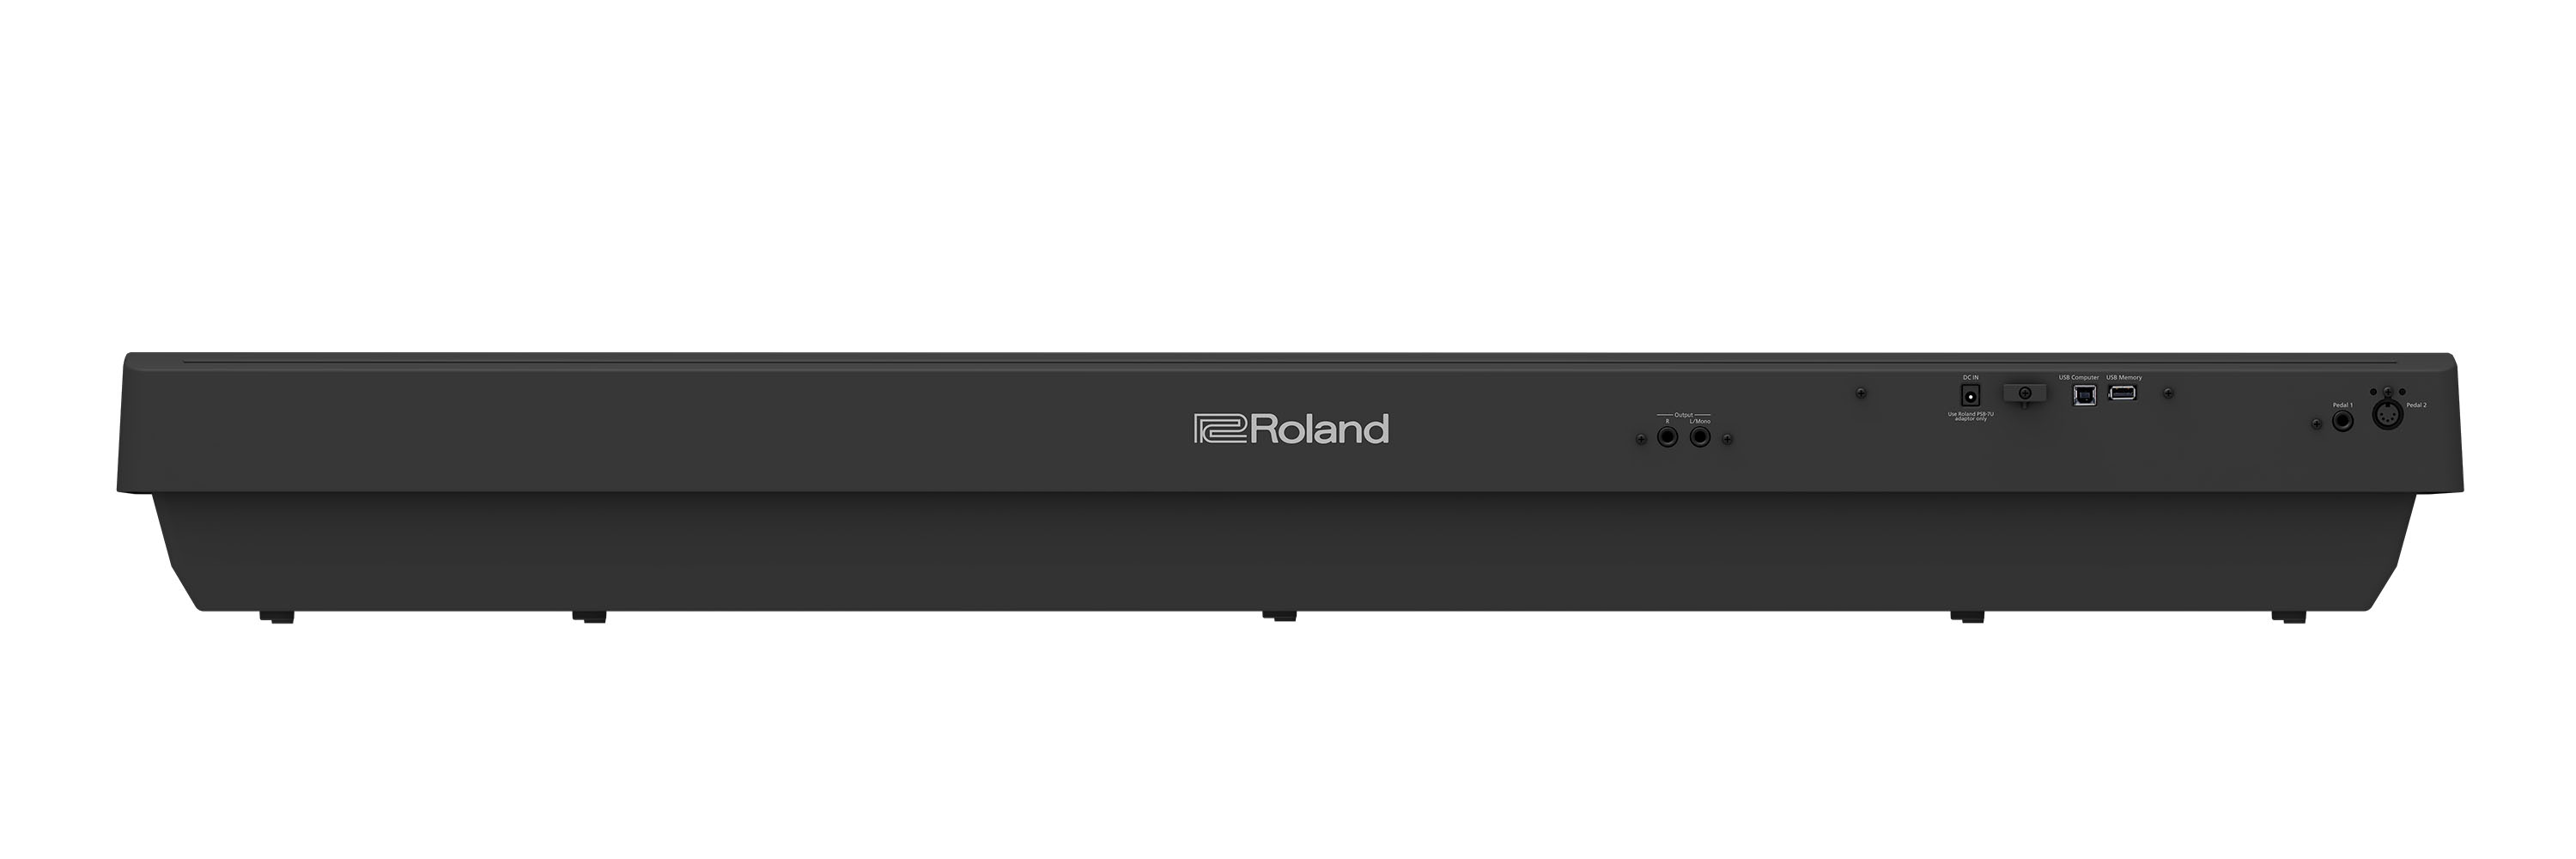 Roland Fp-30x Bk - Noir - Piano digital portatil - Variation 2